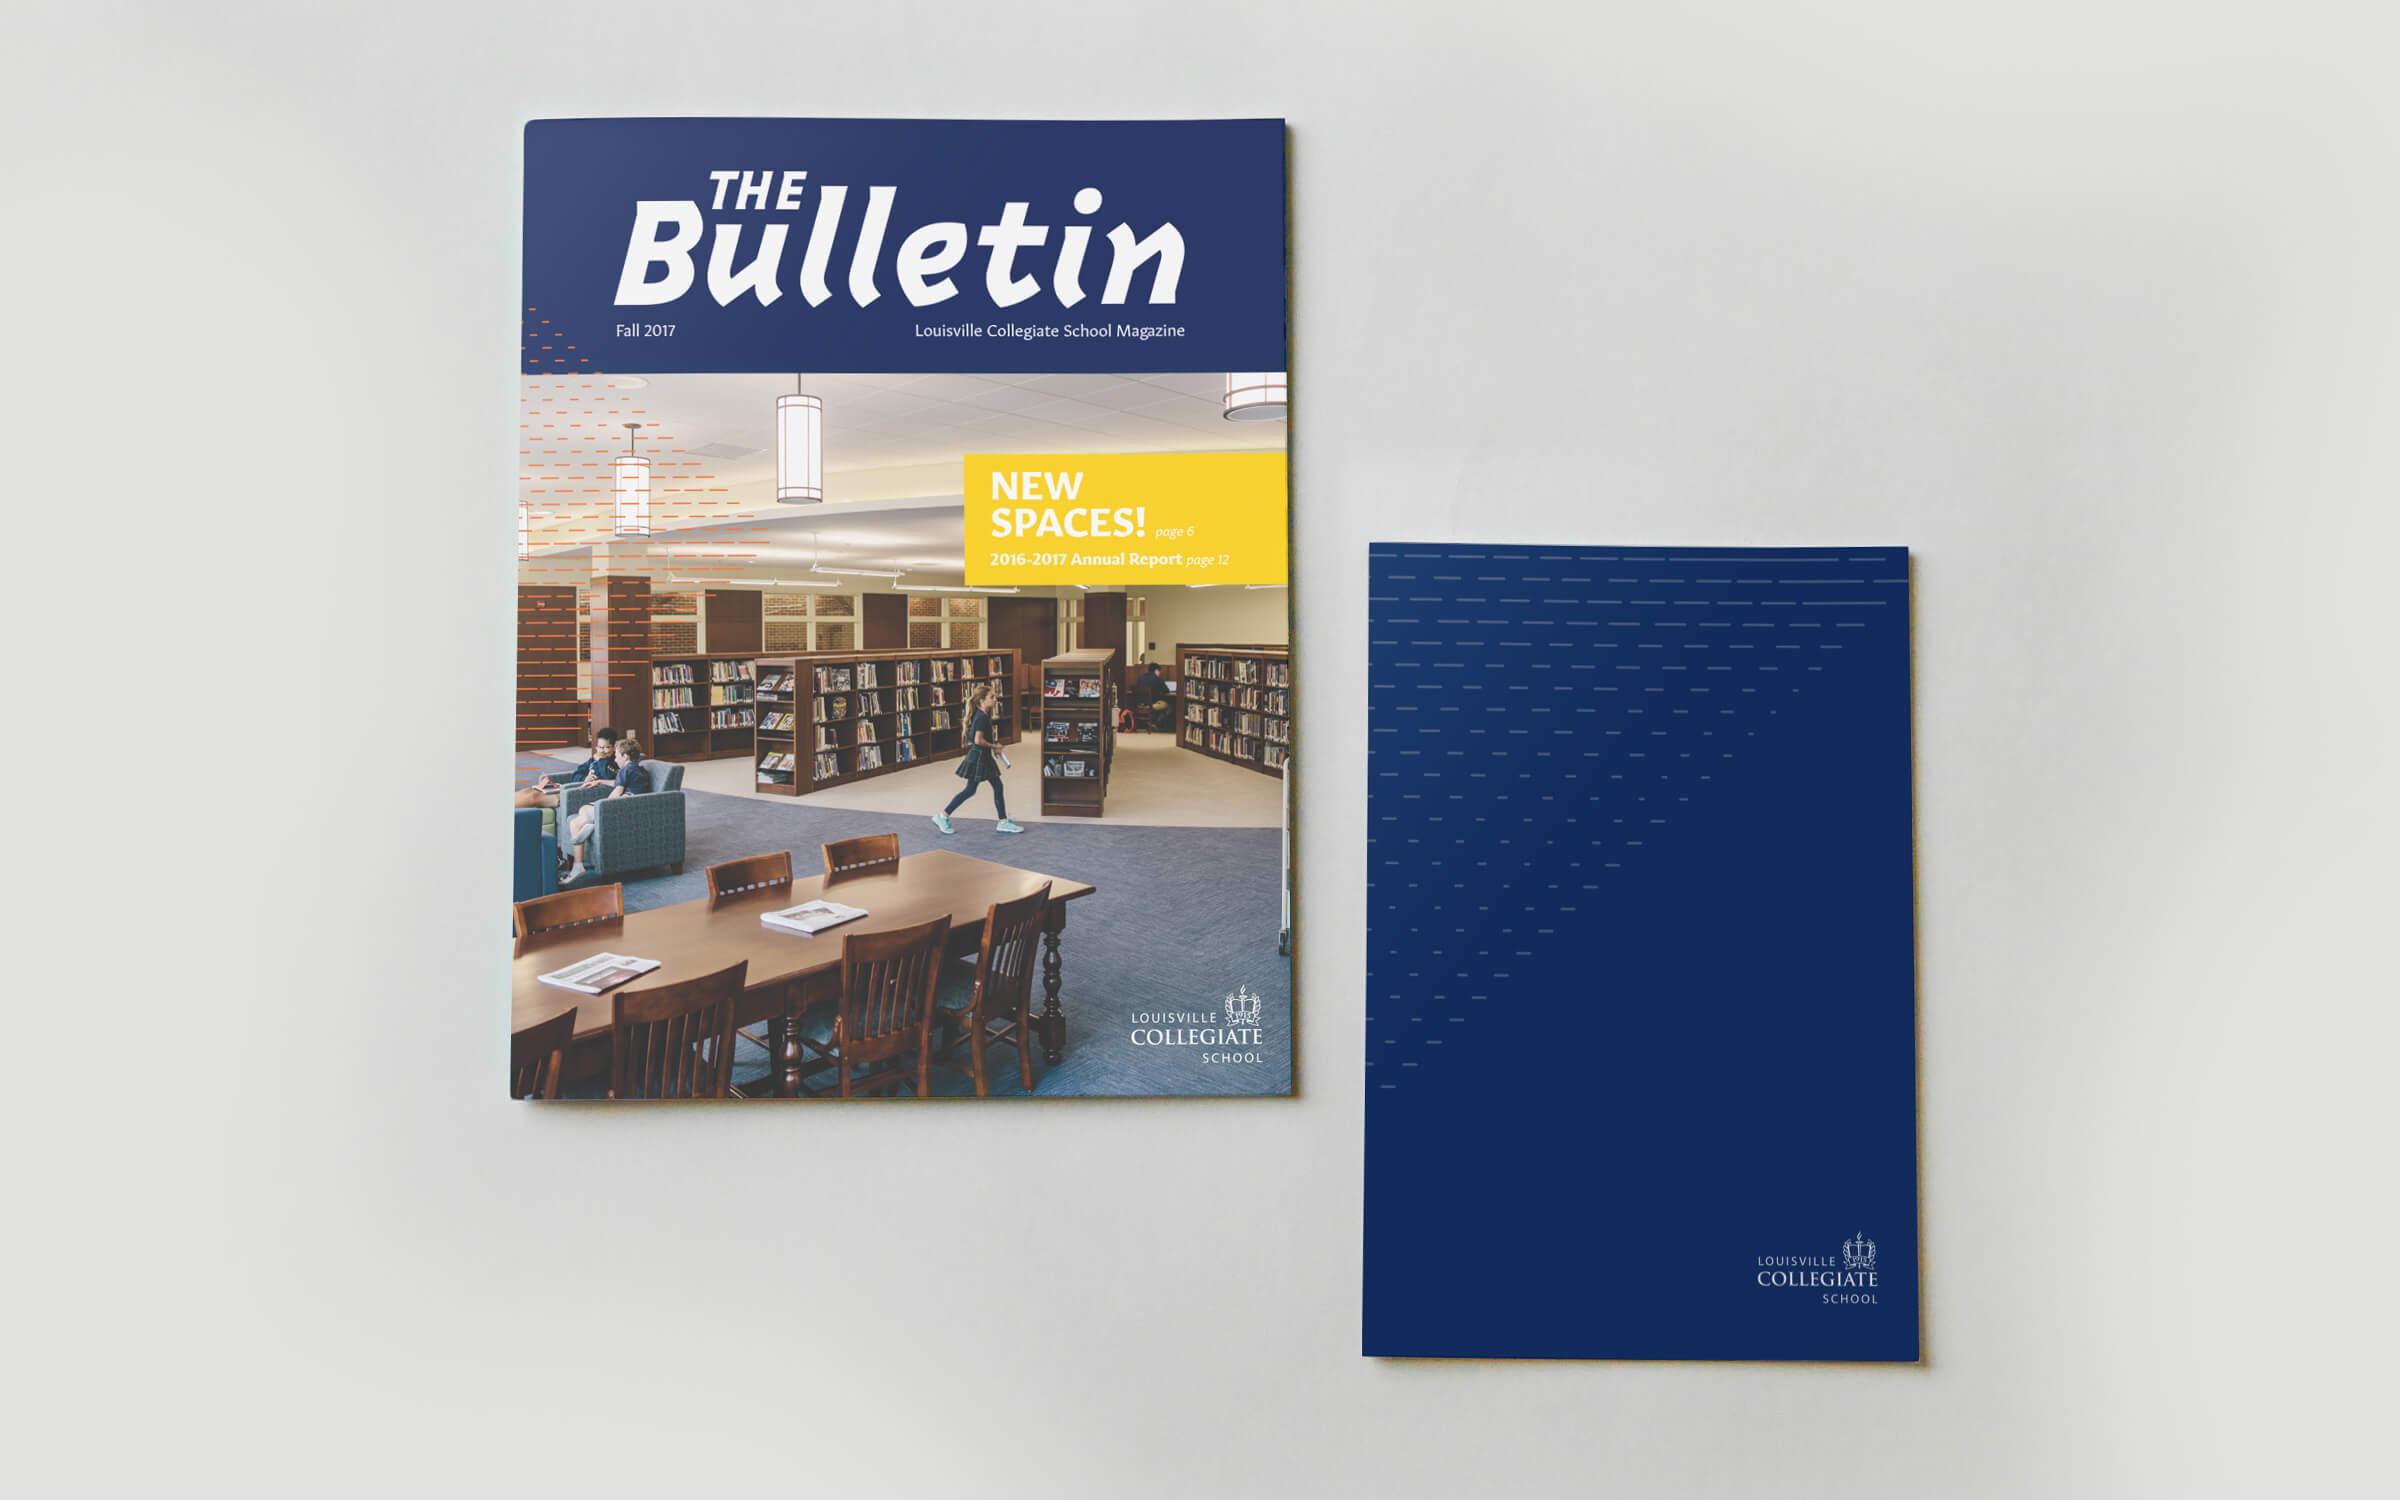 The Bulletin, a Louisville Collegiate School magazine.